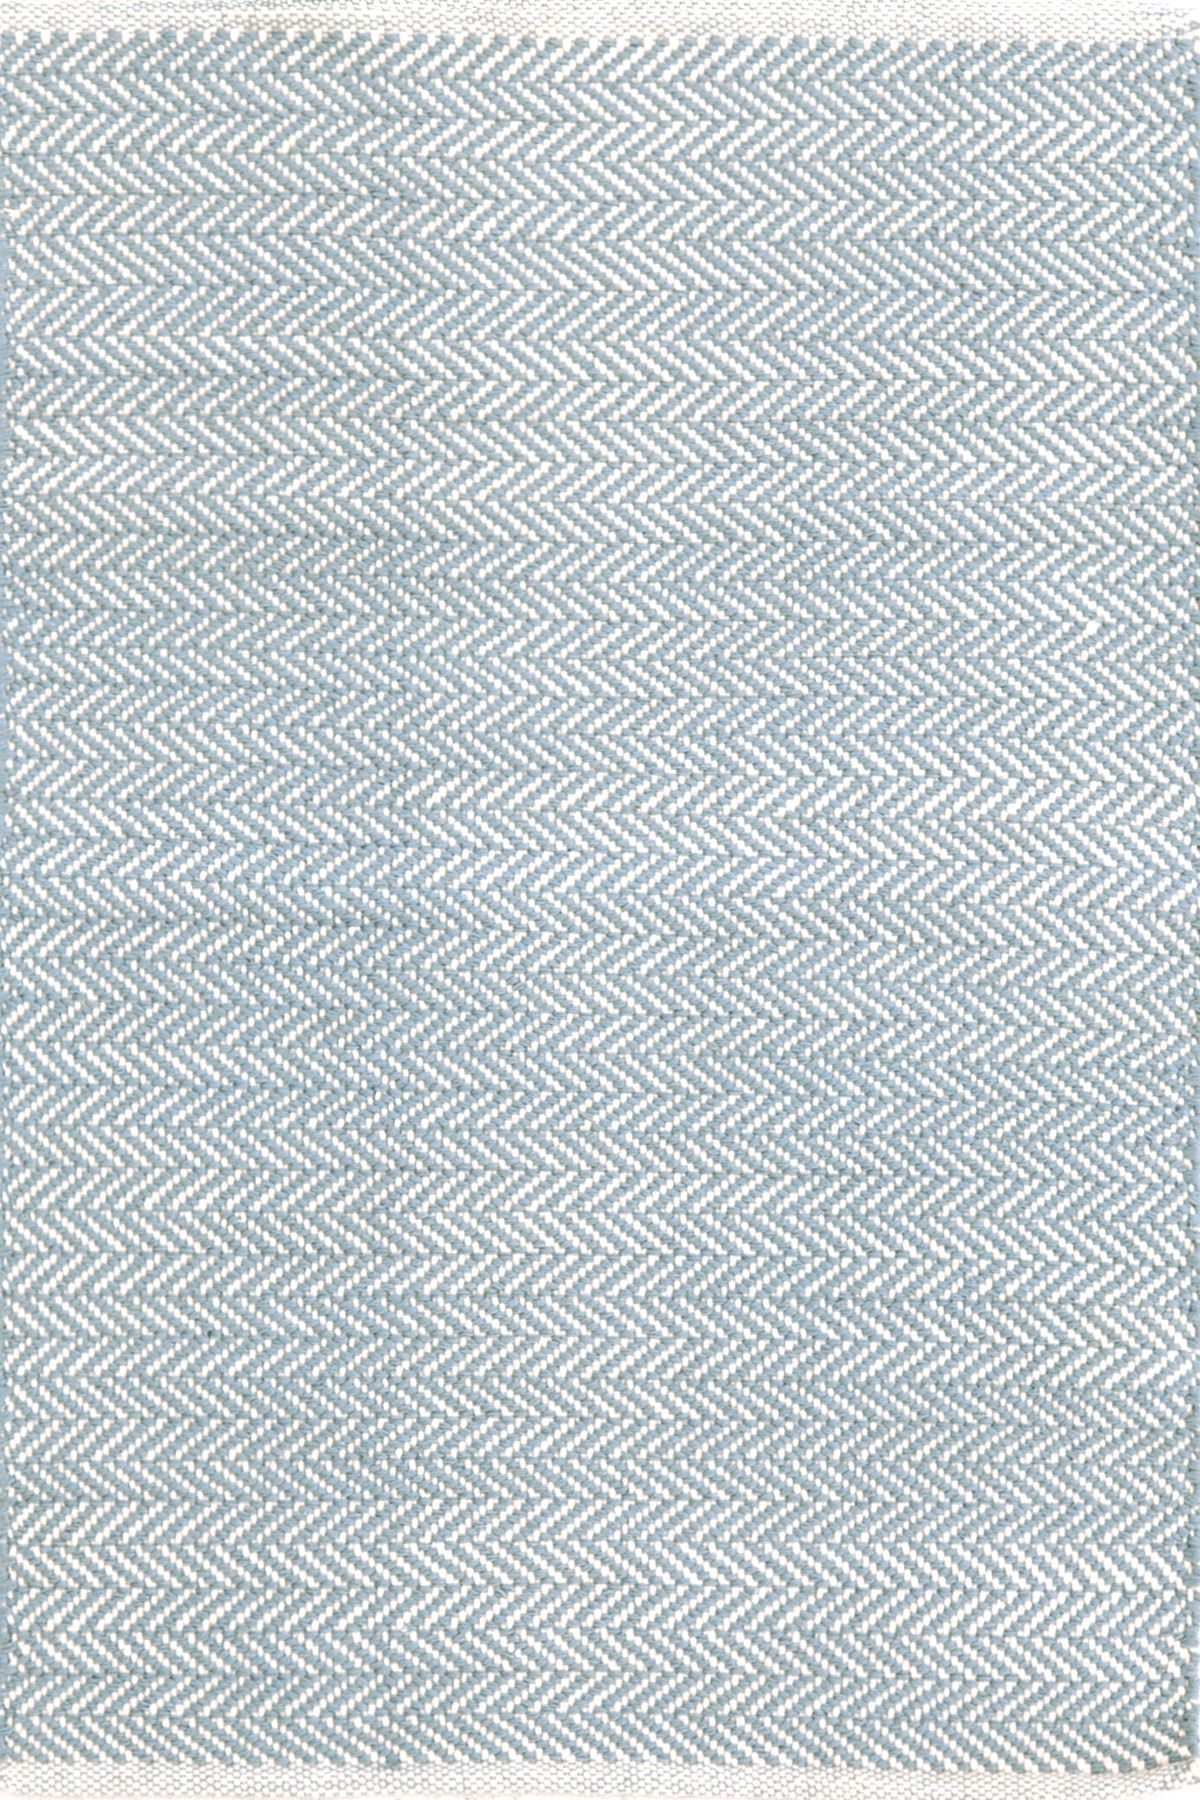 Herringbone Swedish Blue Woven Cotton Rug - 8x10 - Image 0